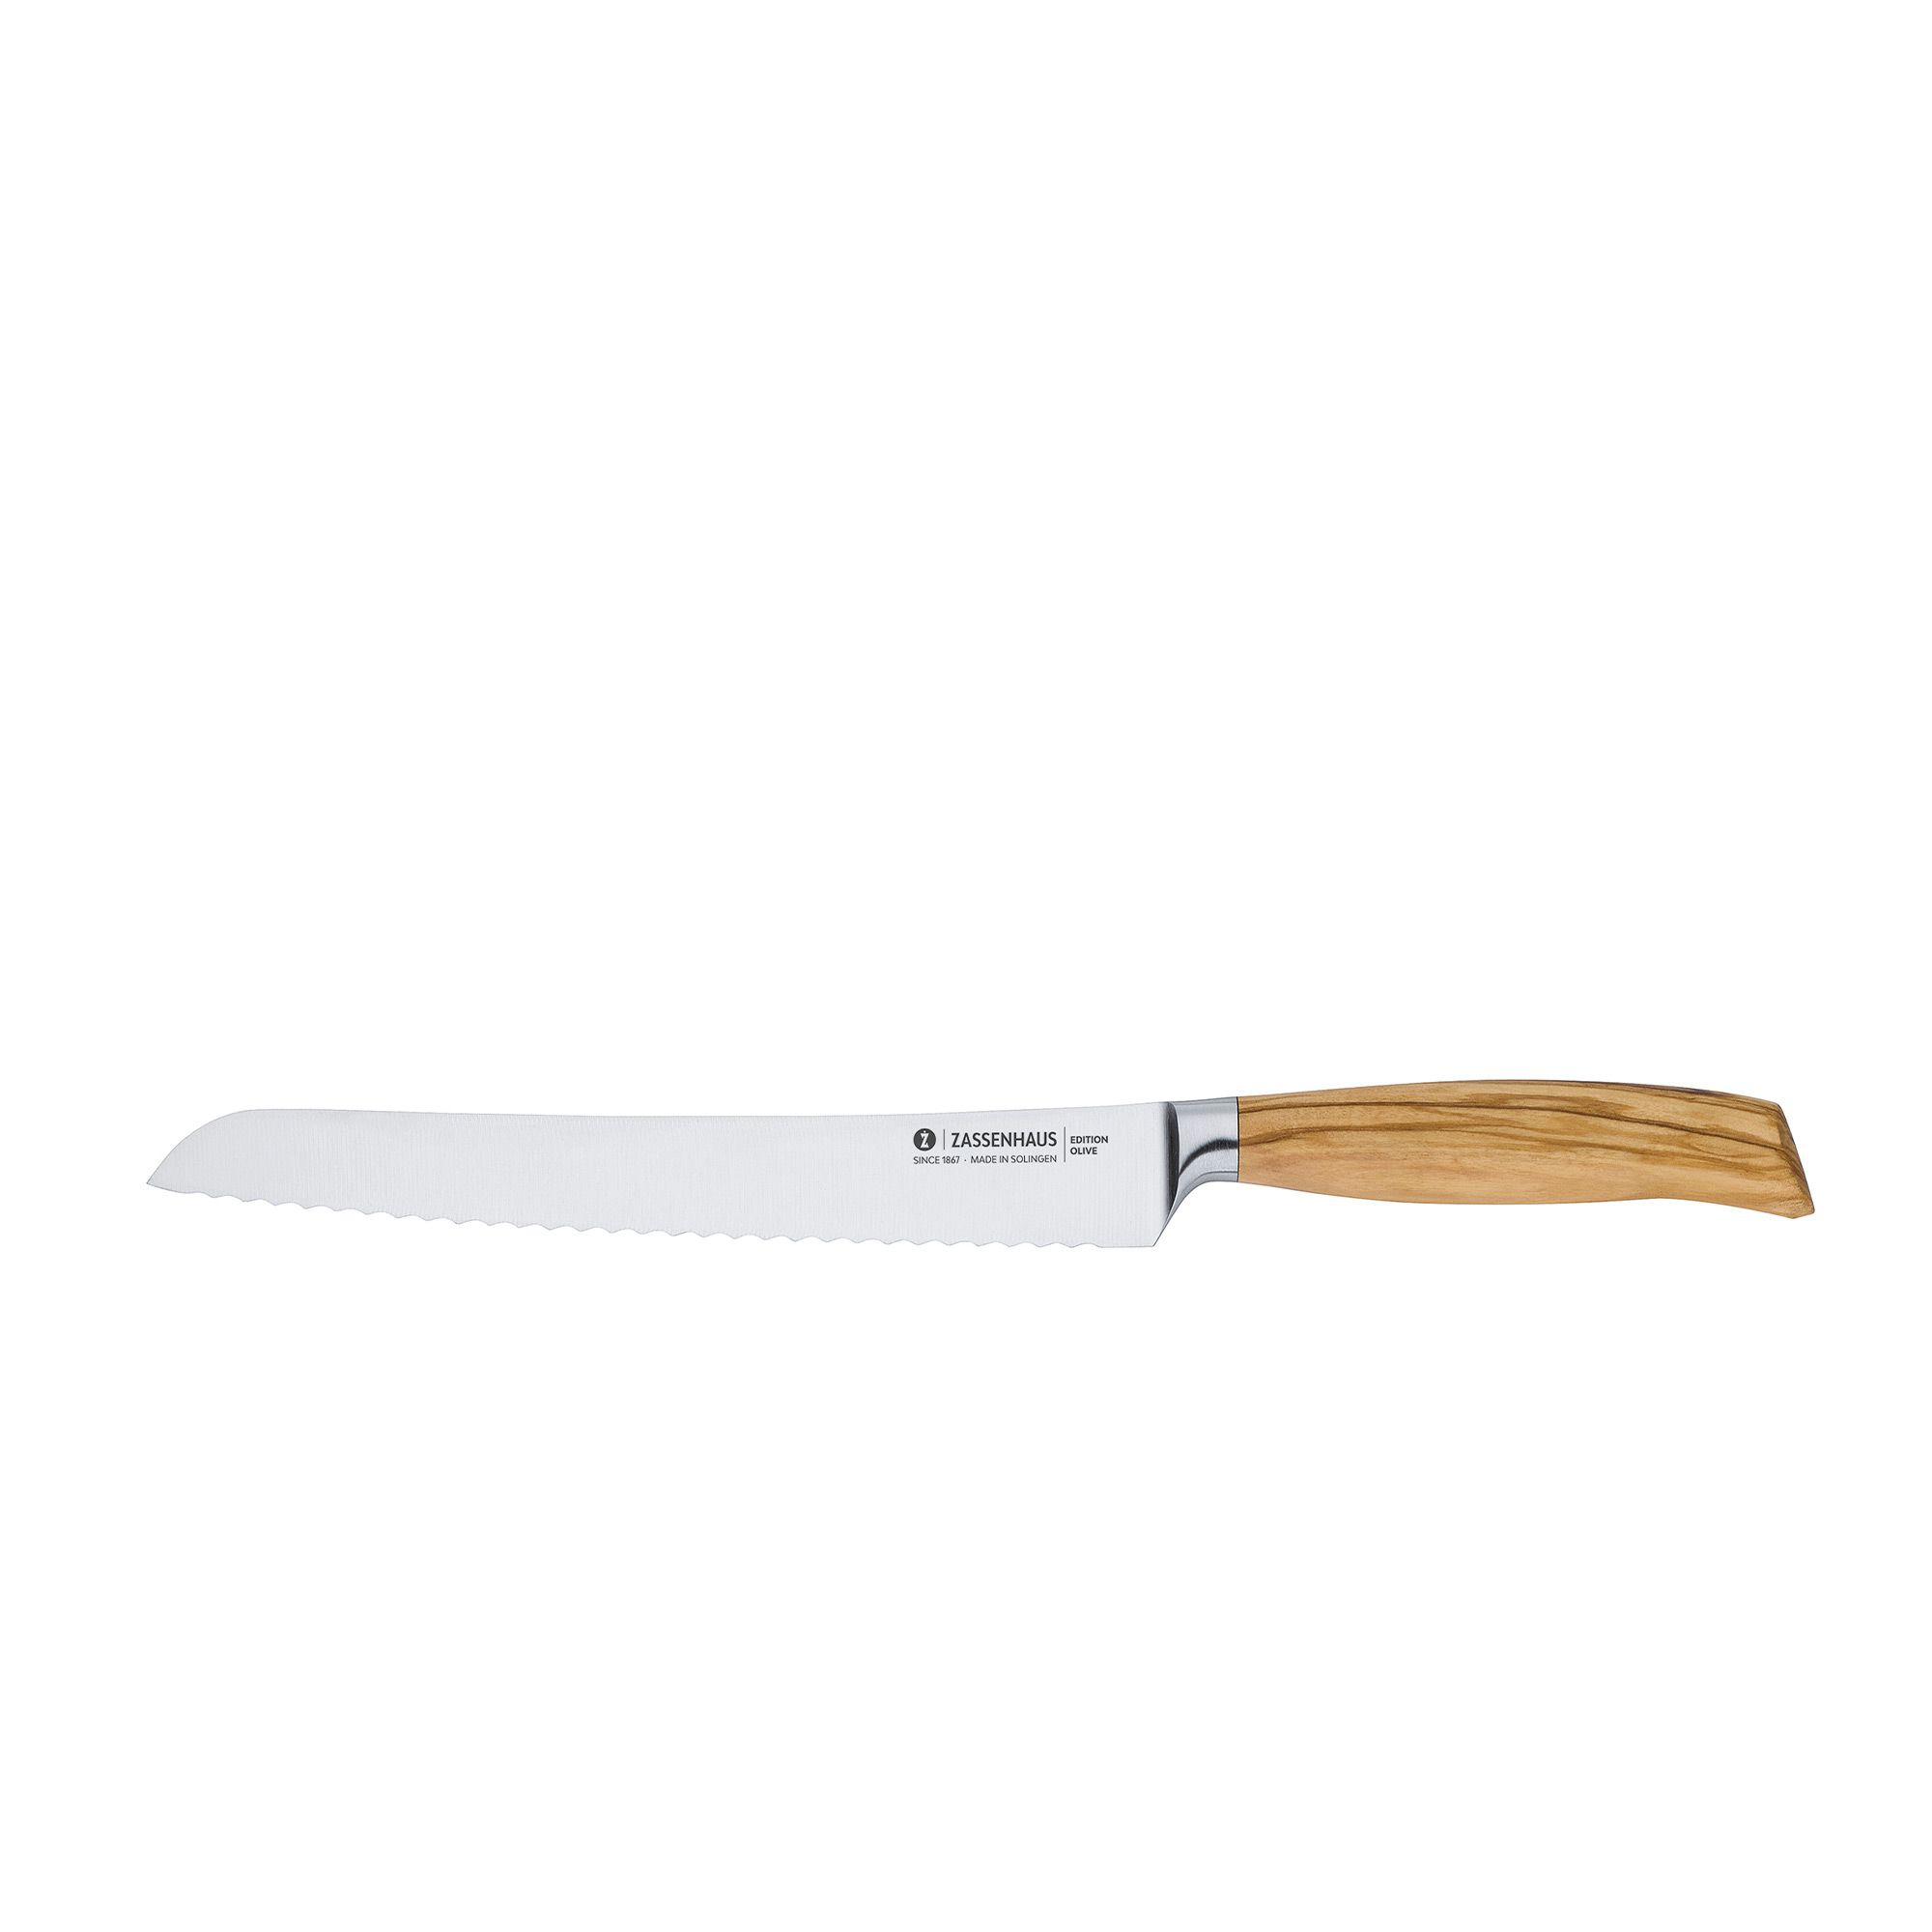 Zassenhaus - bread knife 22 cm - EDITION OLIVE